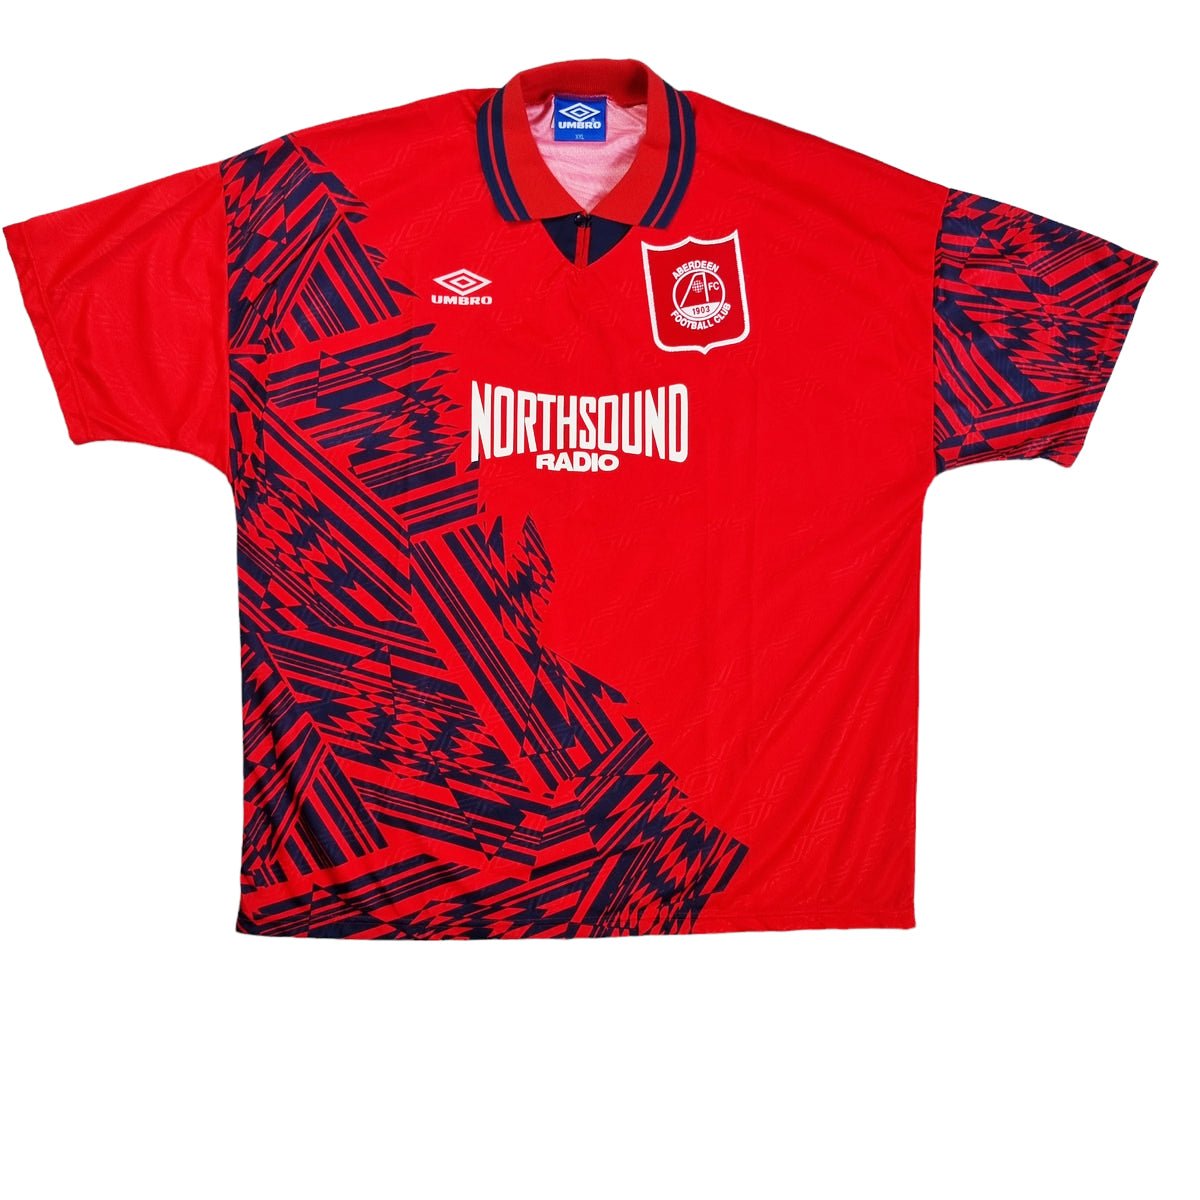 Brazil 1994 - 1995 men's home football shirt jersey camiseta Umbro size M -  L